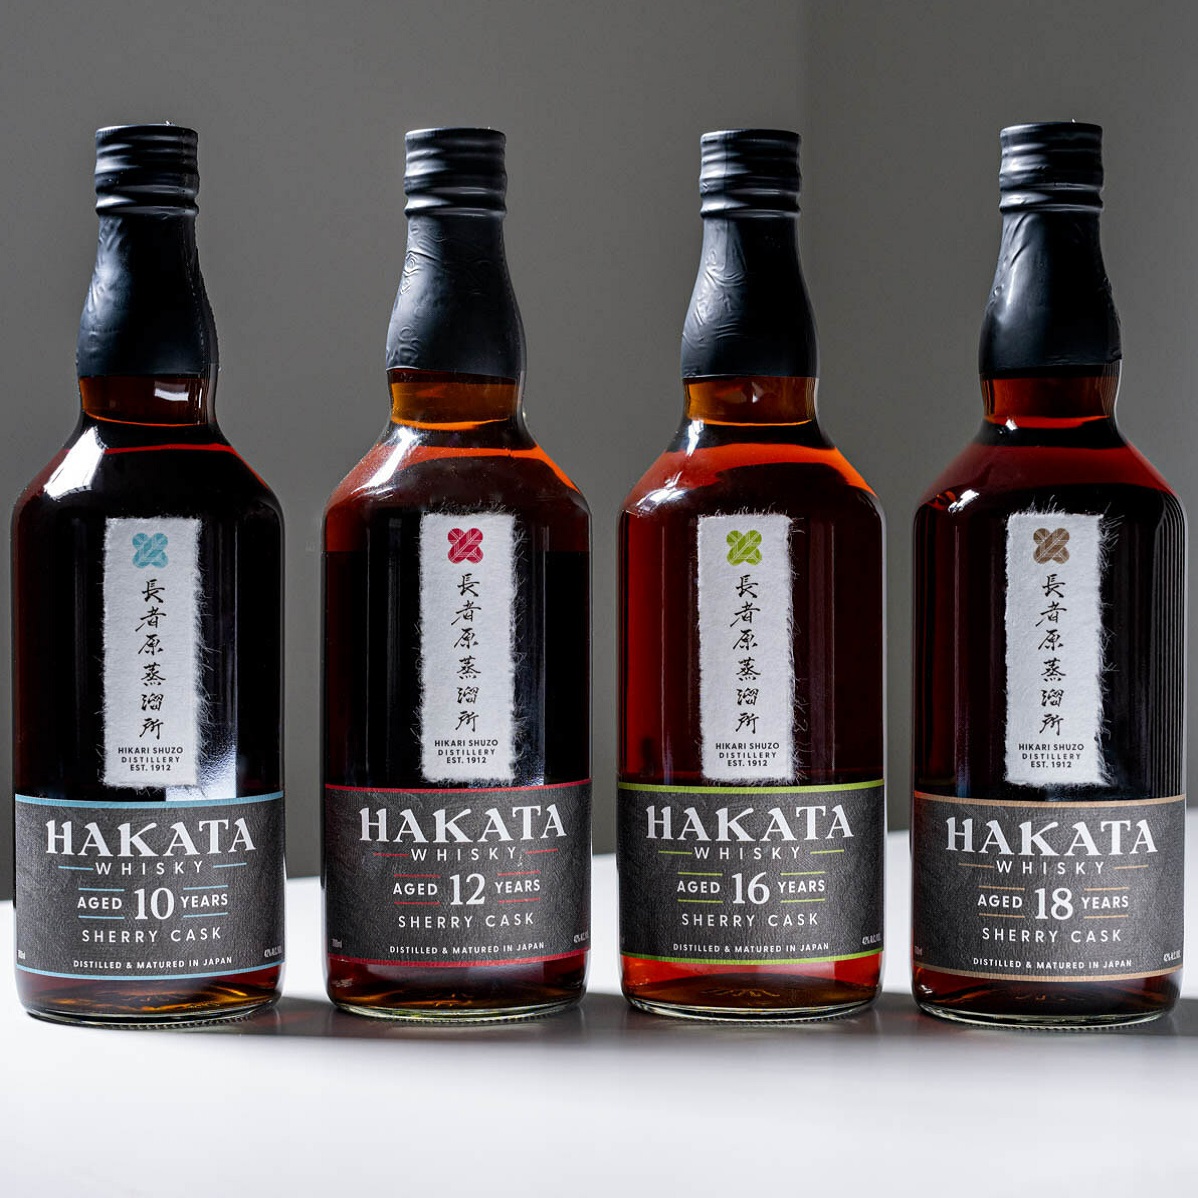 Hakata Whisky range